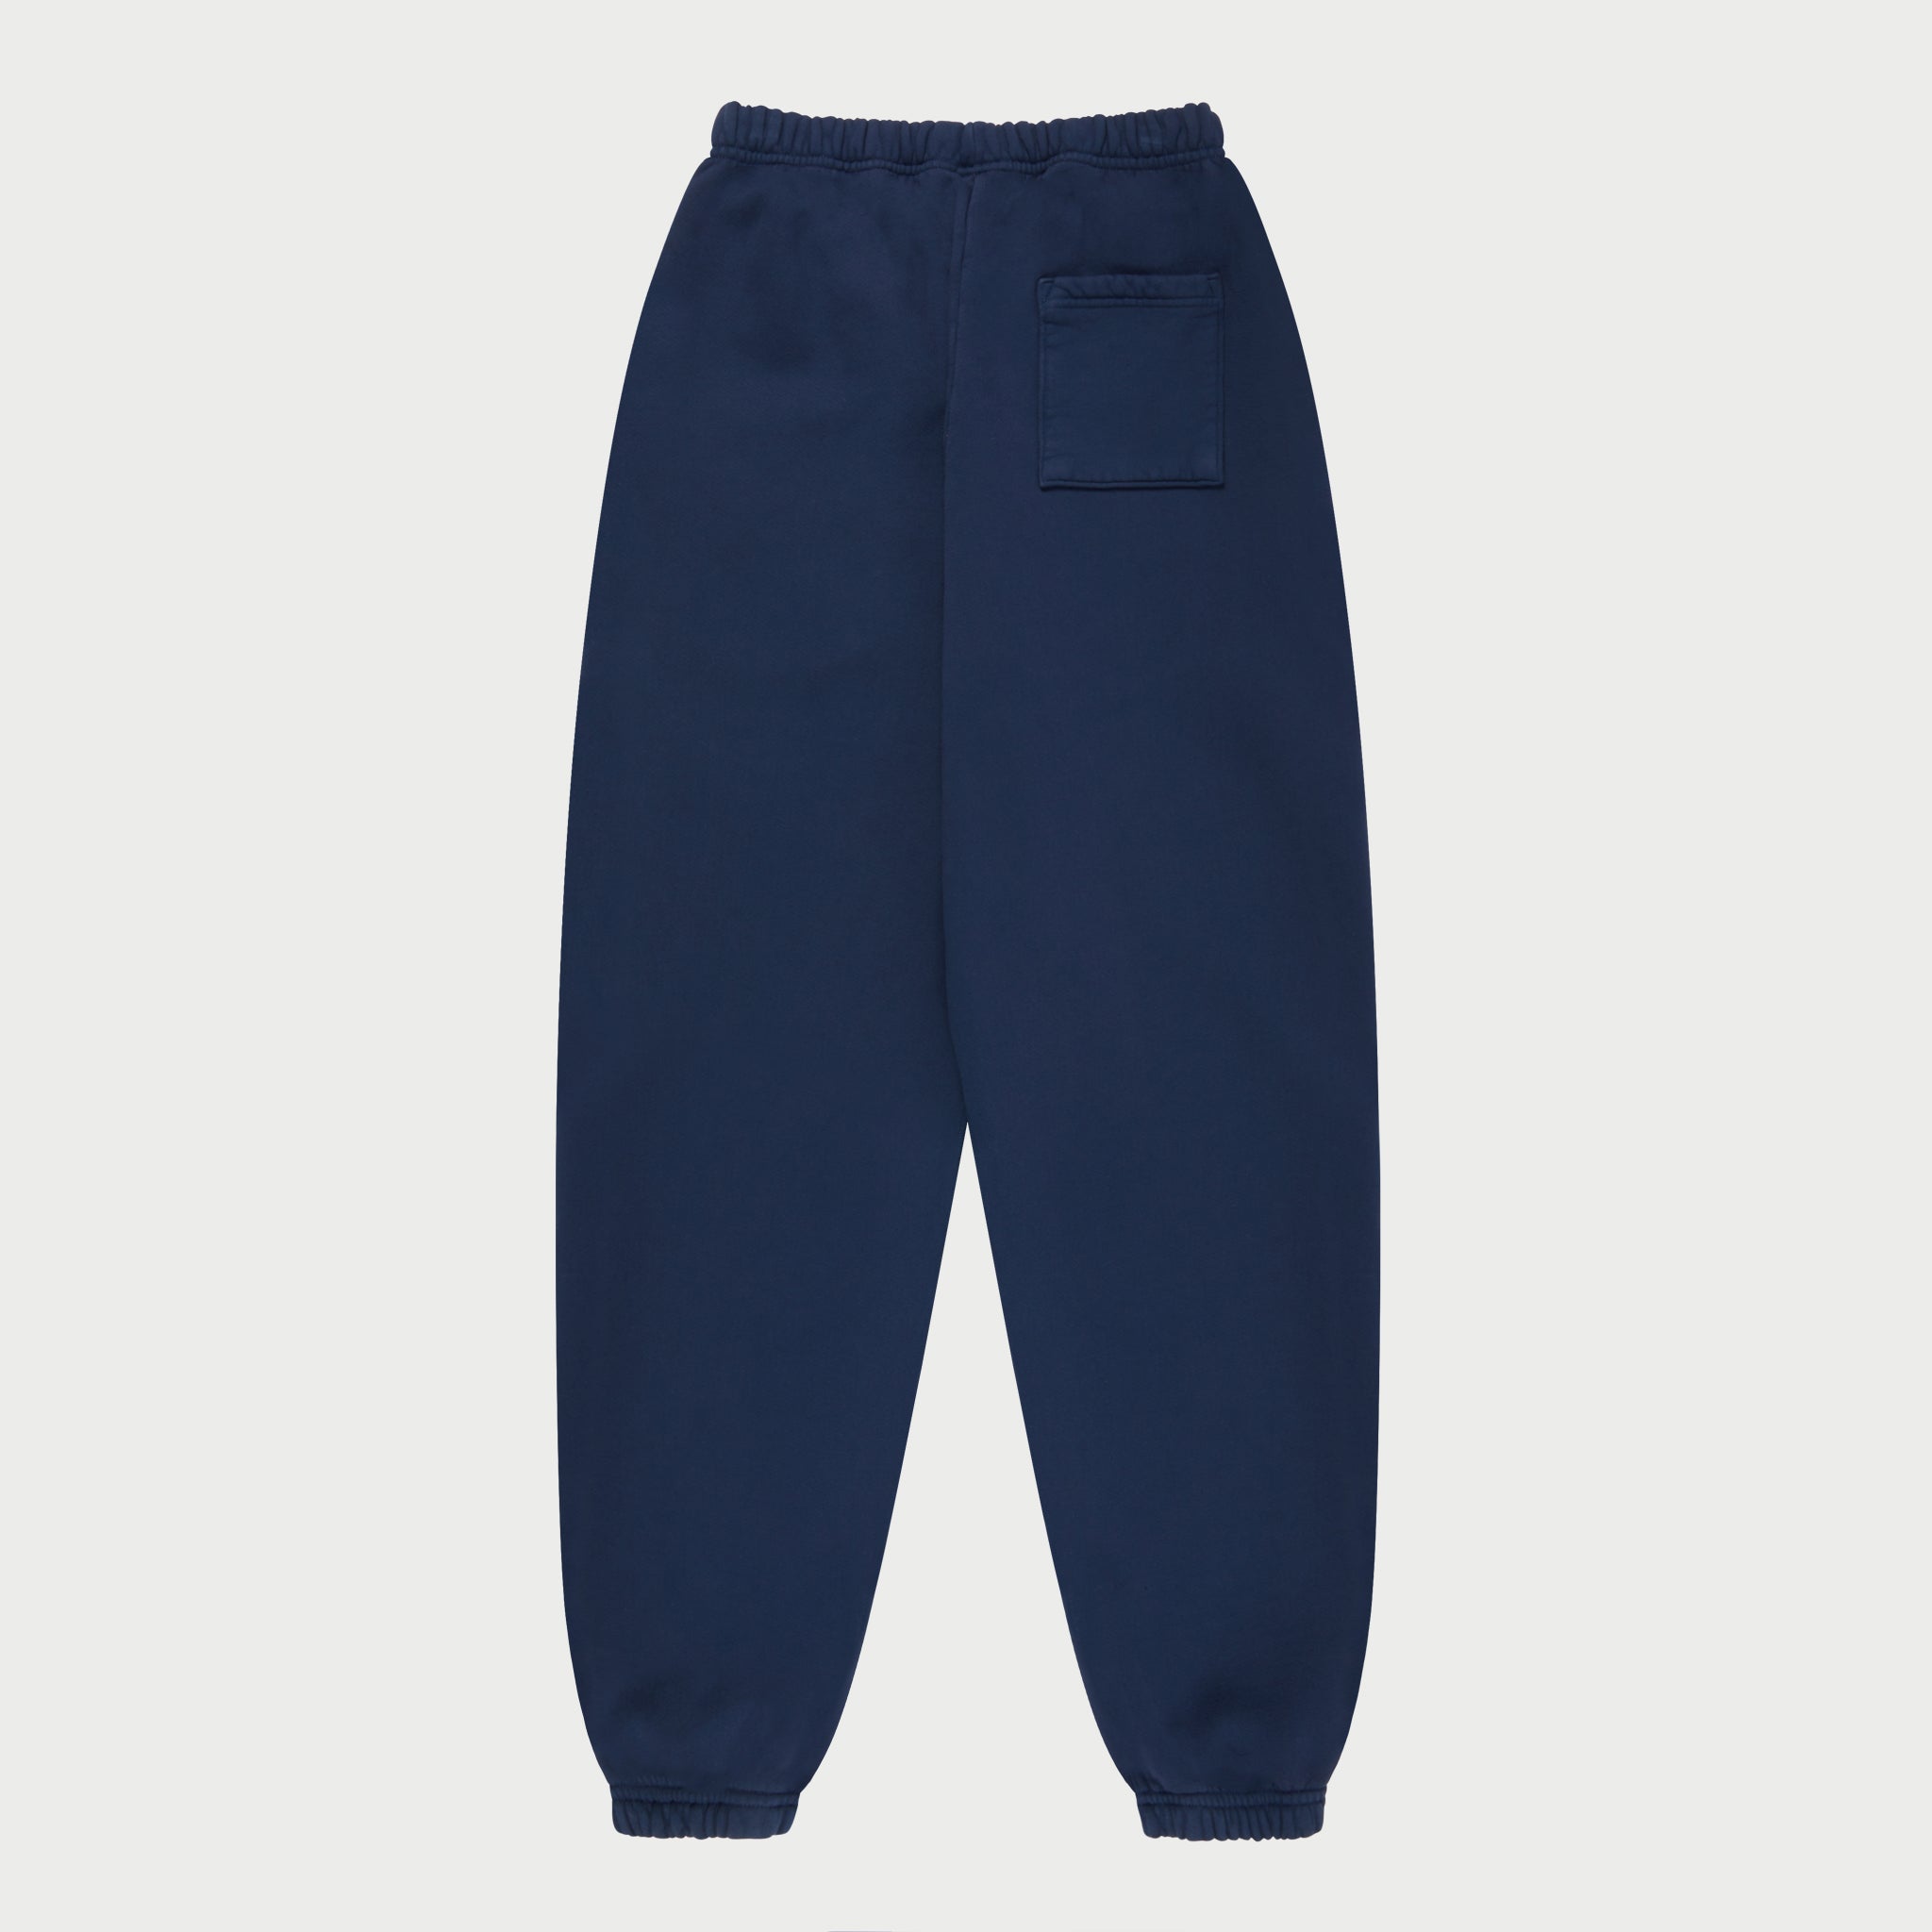 Outdoorsman Sweatpants (Navy)